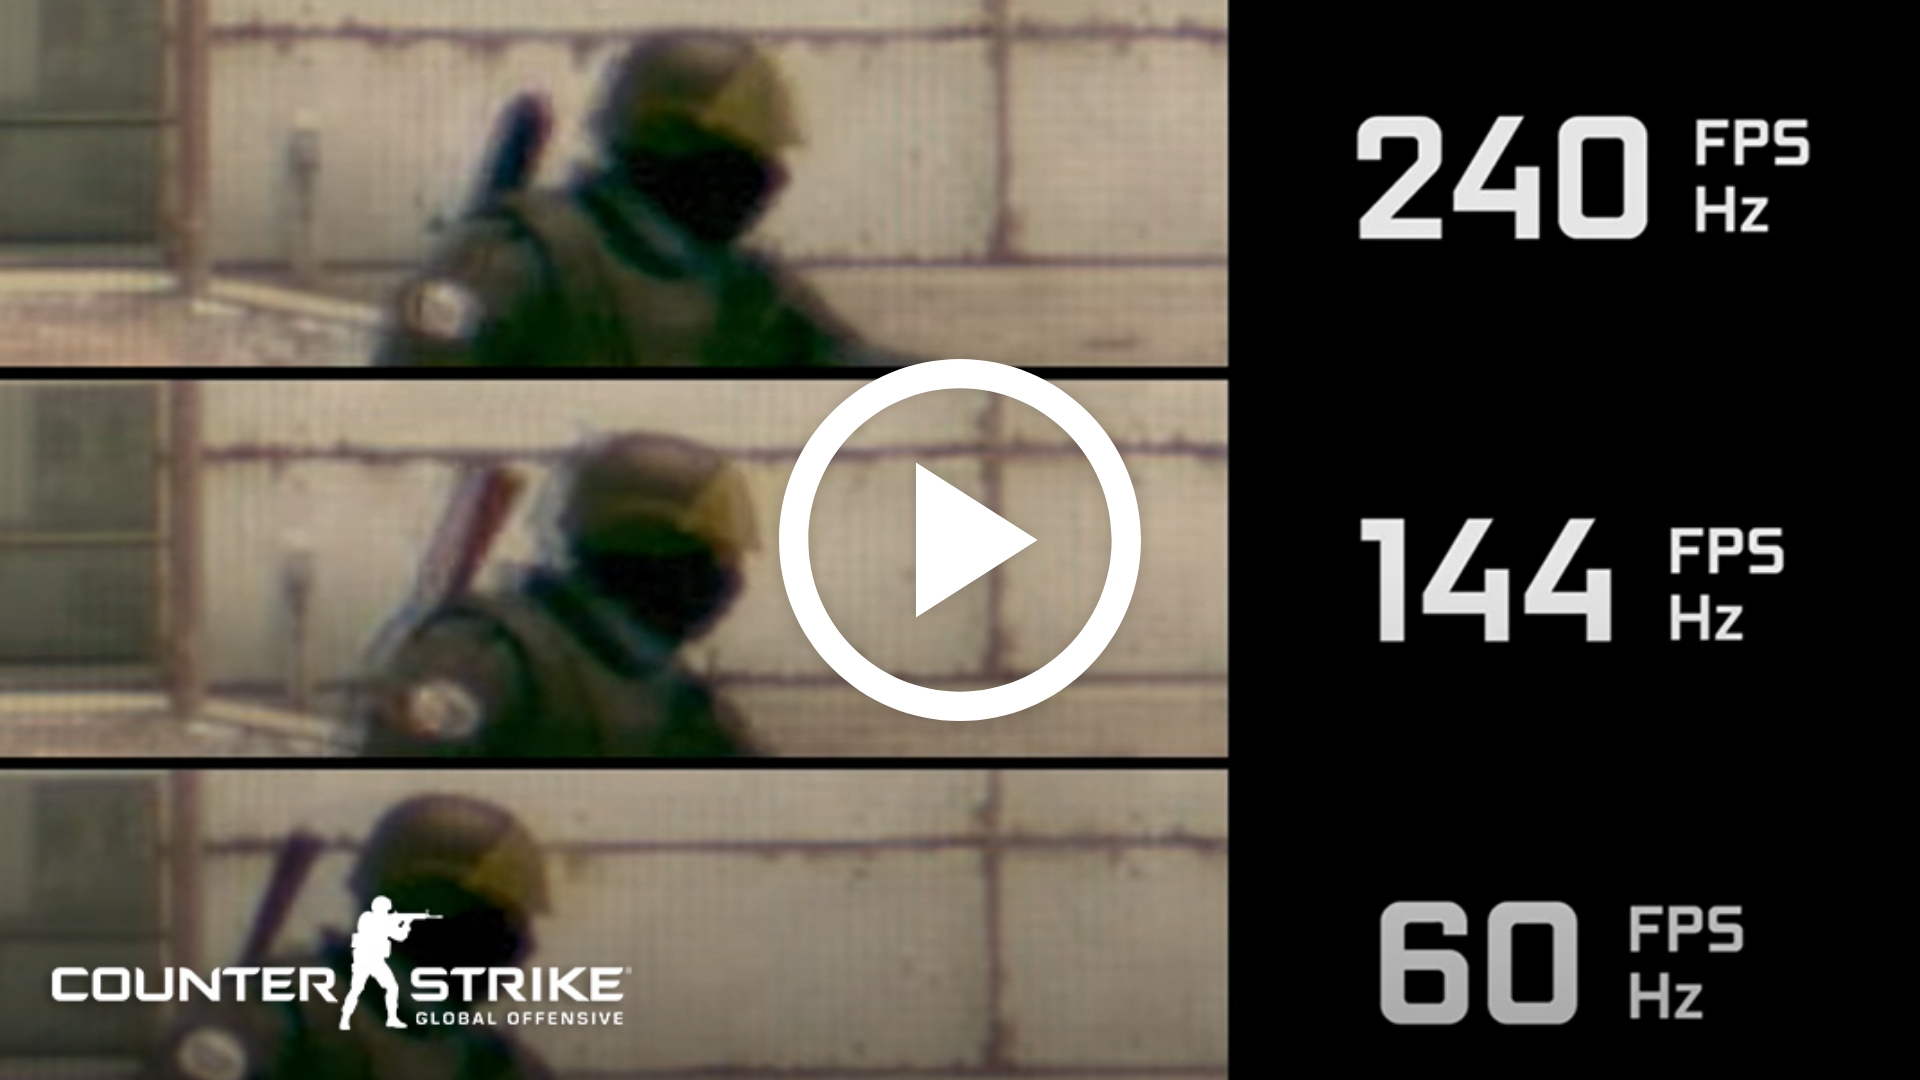  『CS:GO』の高フレーム レート - スローモーション検証映像